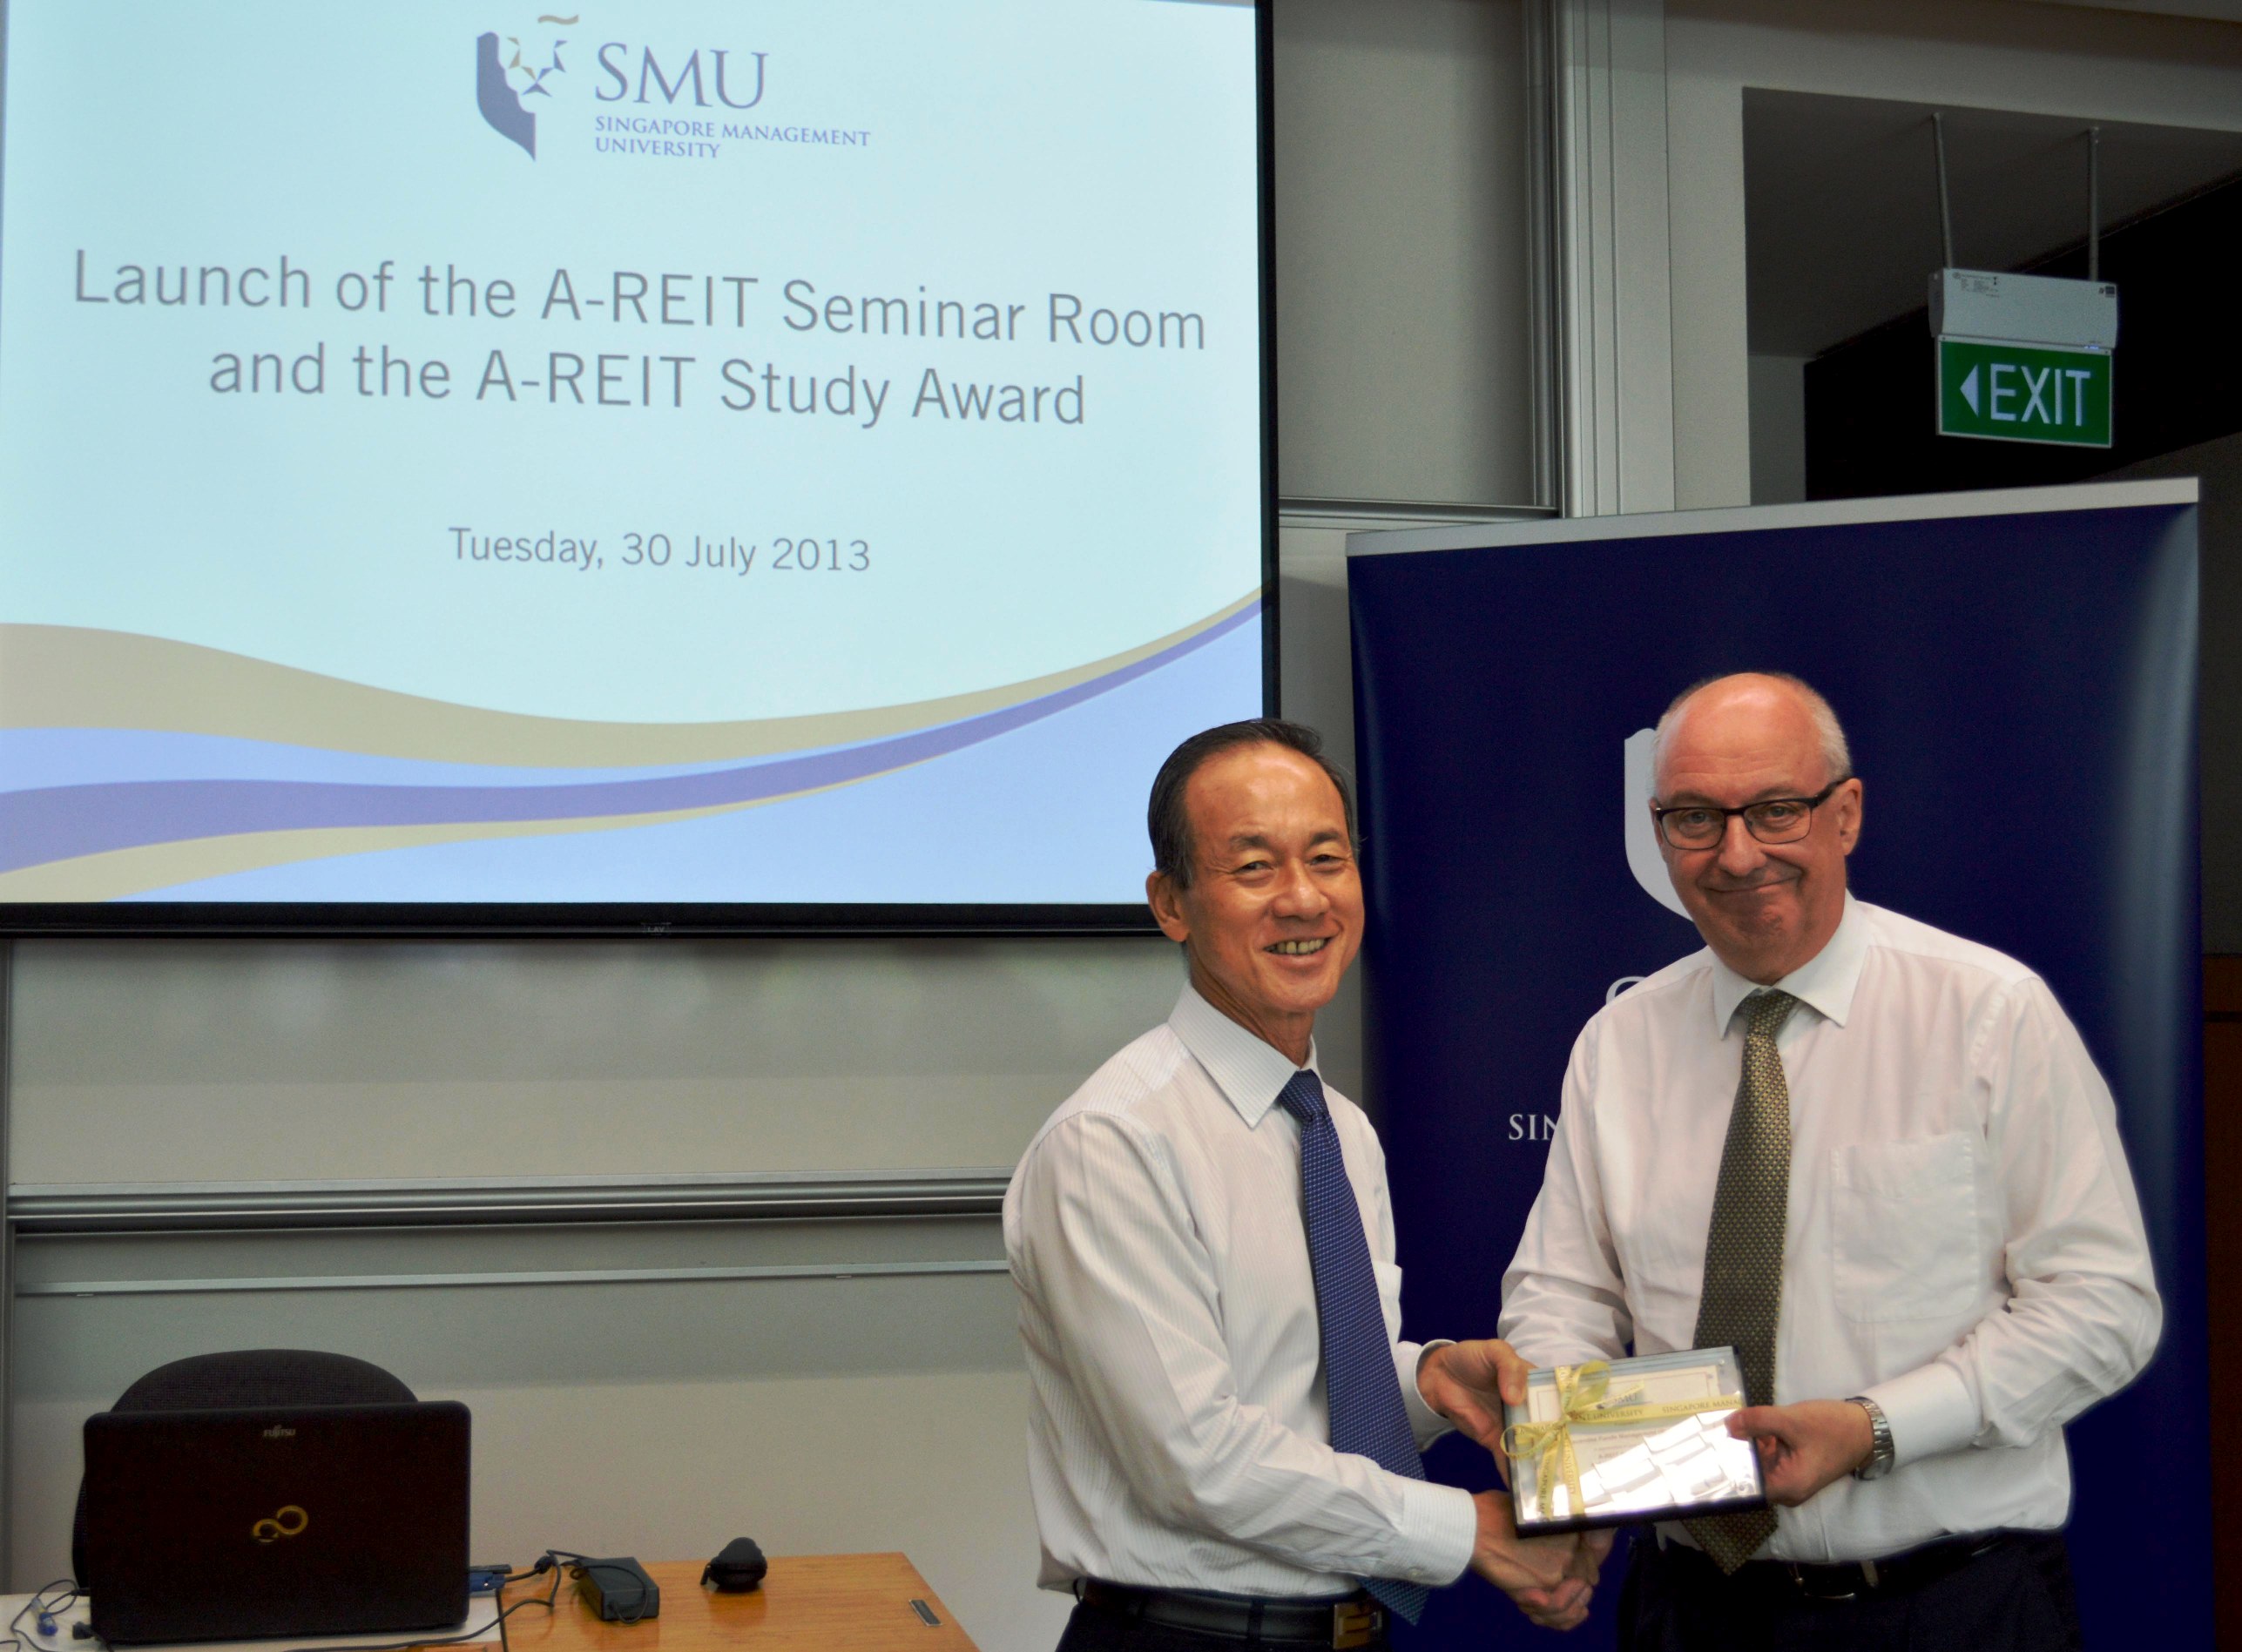 A-REIT Study Award established at SMU